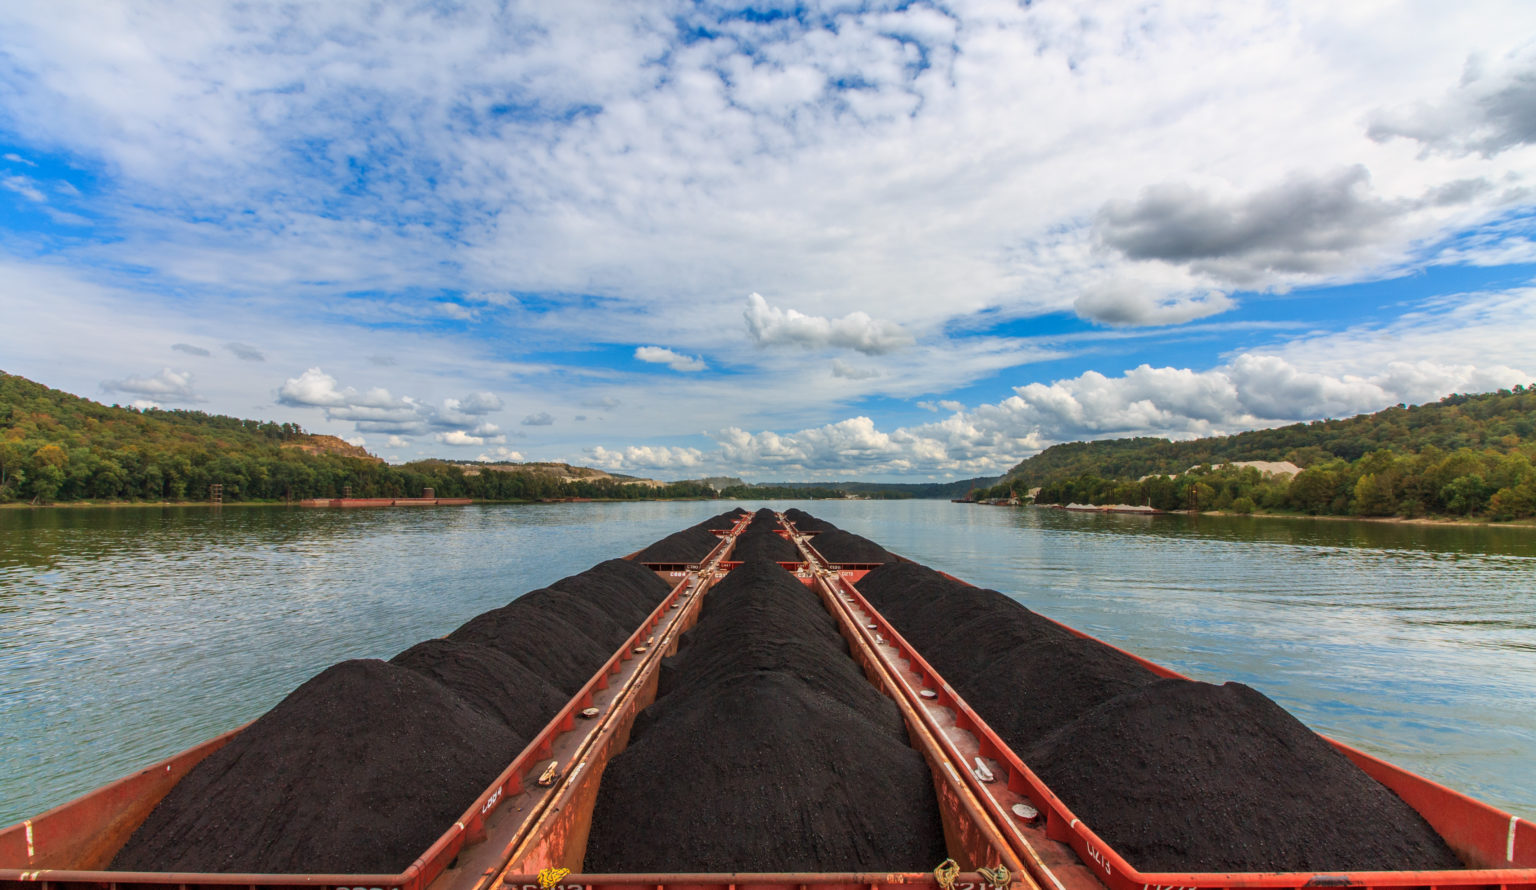 BMO drops anti-coal policy amid Wall Street rebuke of ESG